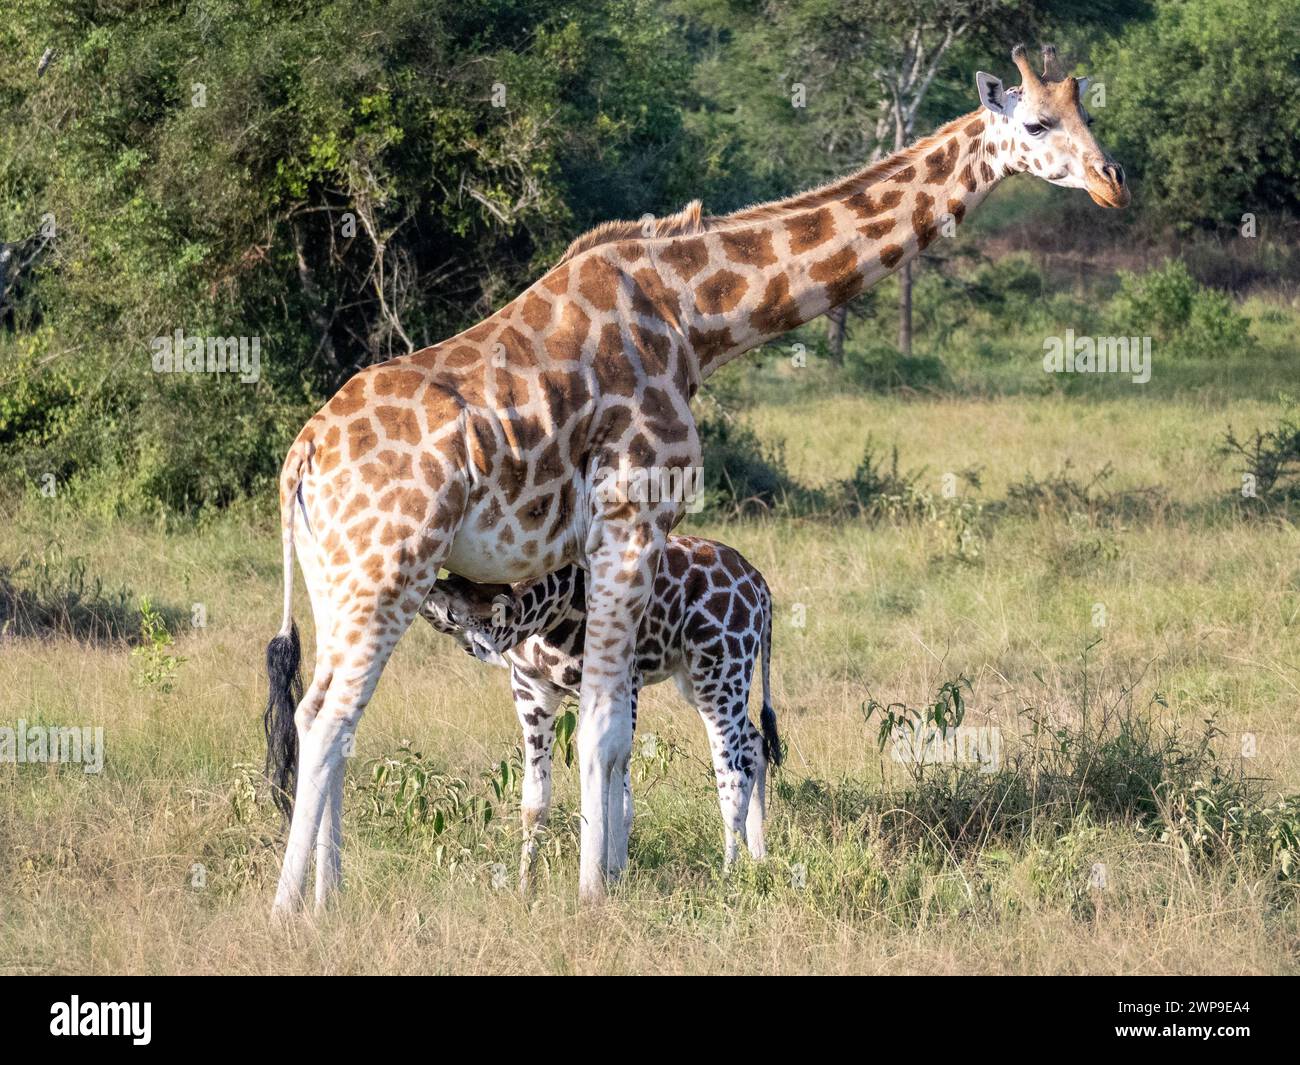 Säuglingsgiraffe (Giraffa camelopardalis rothschildi) im Mburo-Nationalpark in Uganda. Die Babygiraffe ist etwa einen Monat alt. Stockfoto